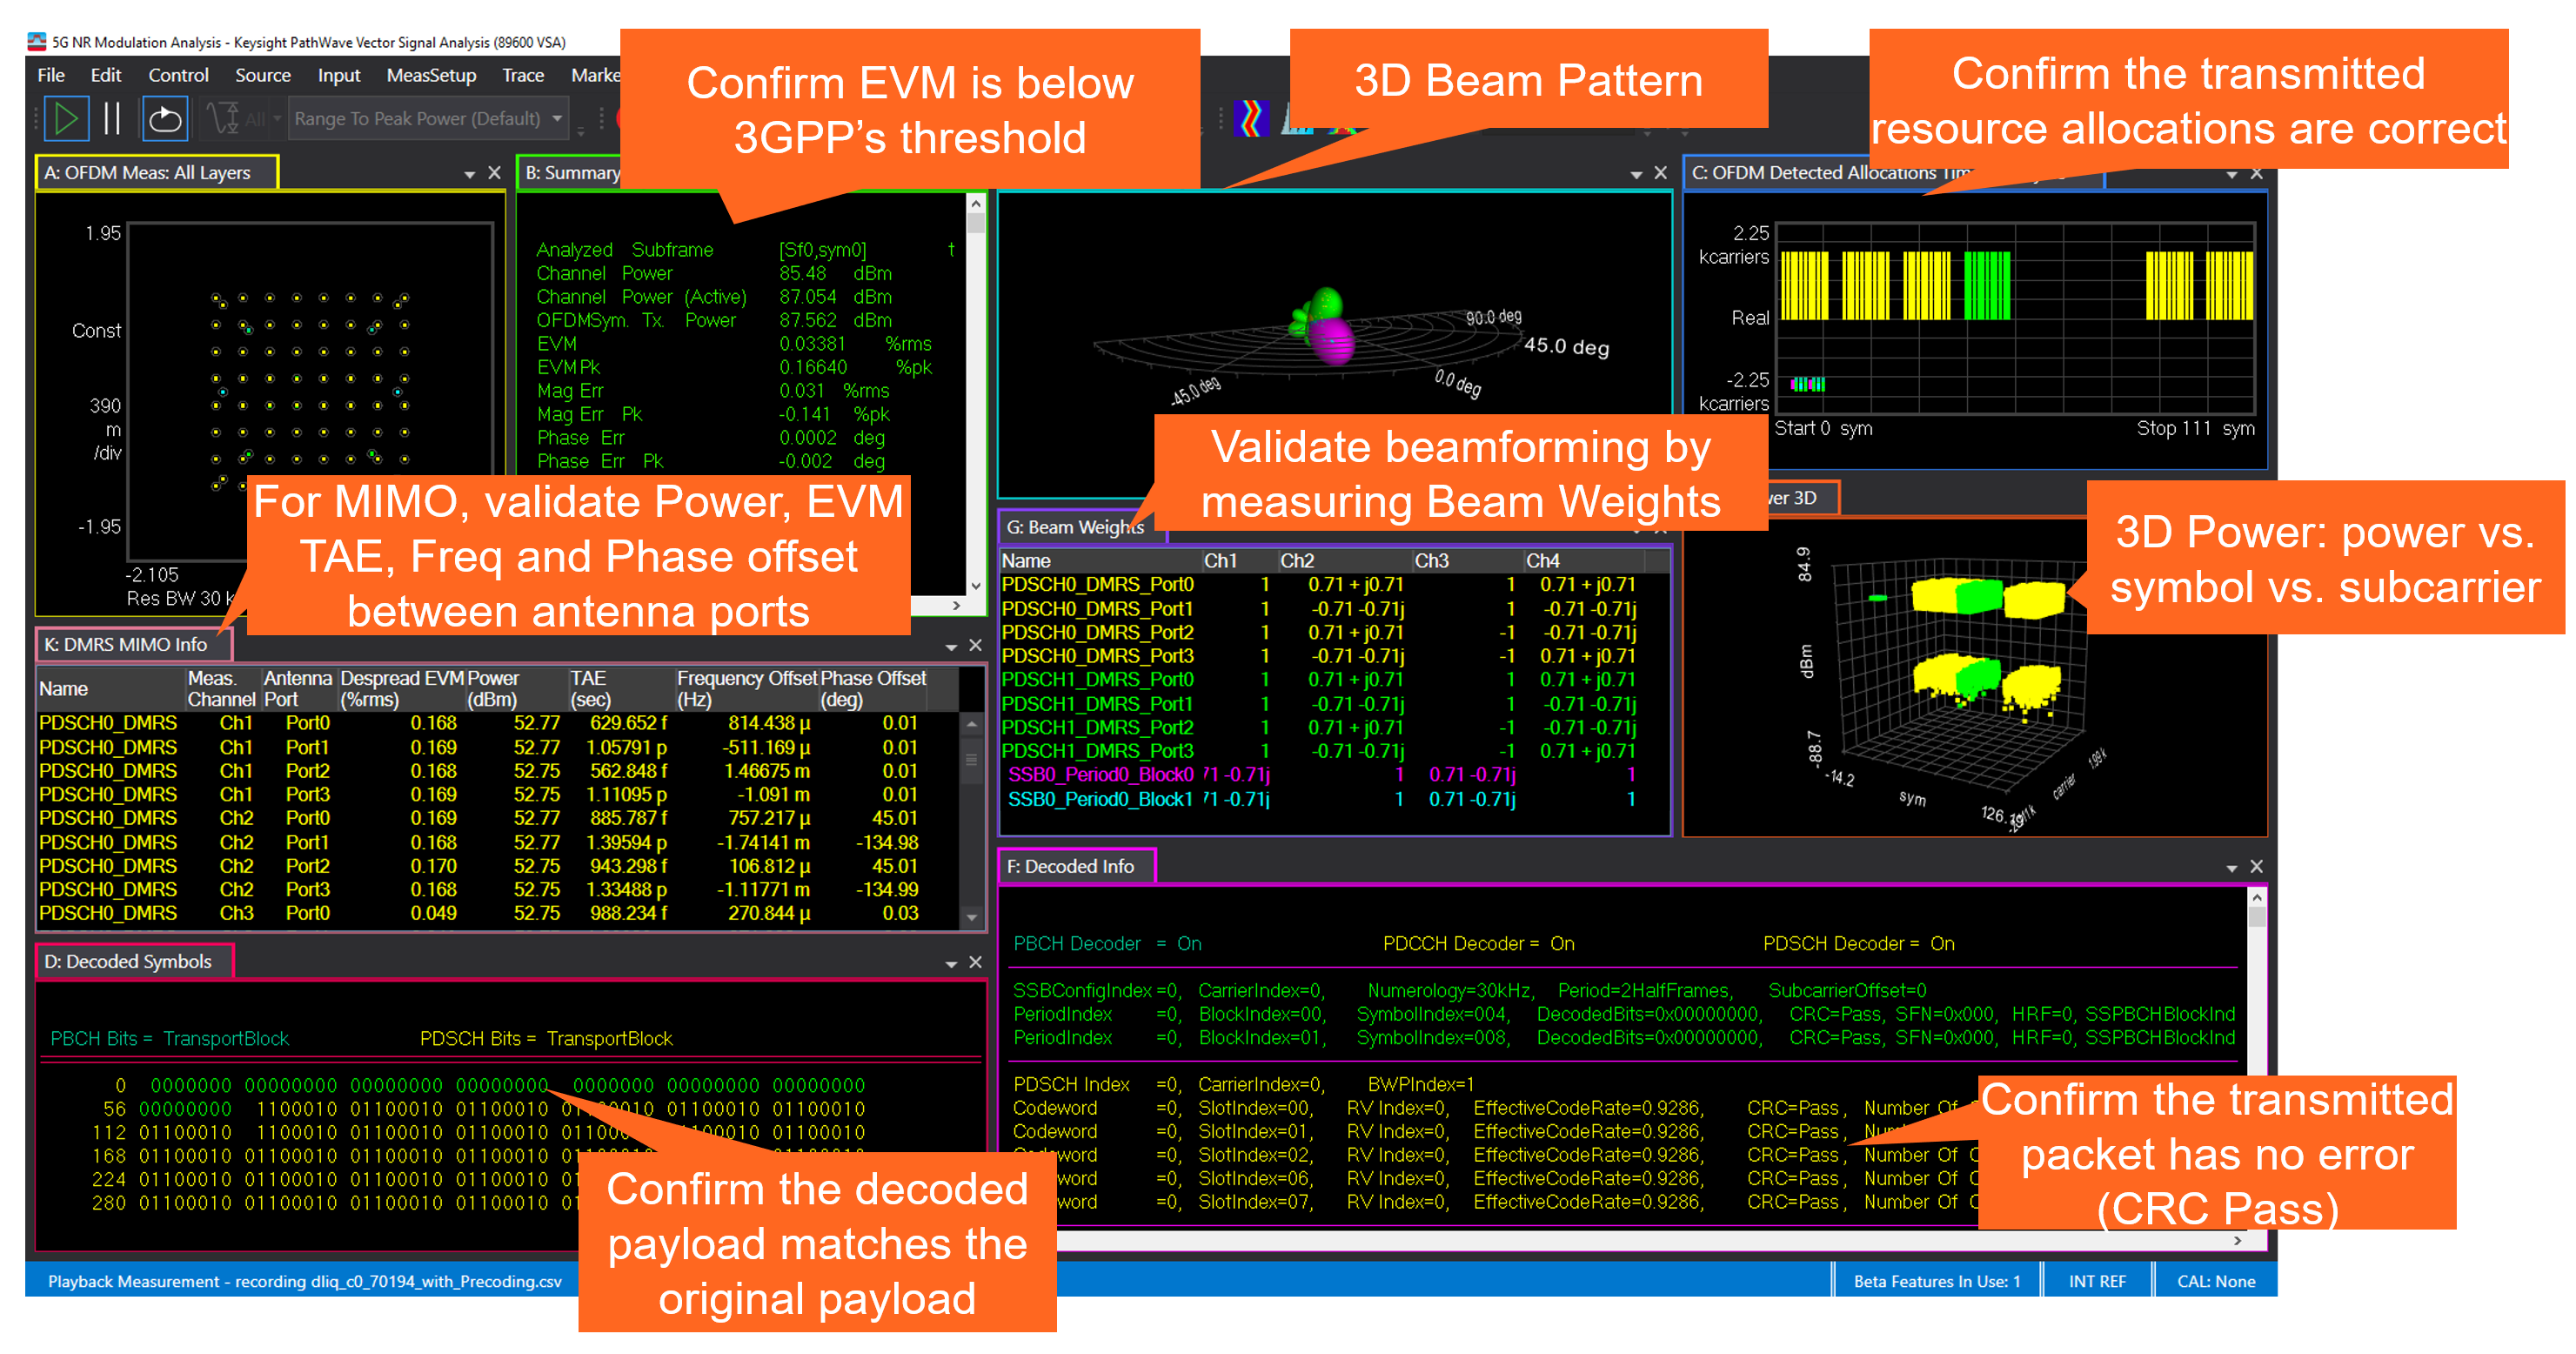 PathWave Vector Signal Analysis (89600 VSA)